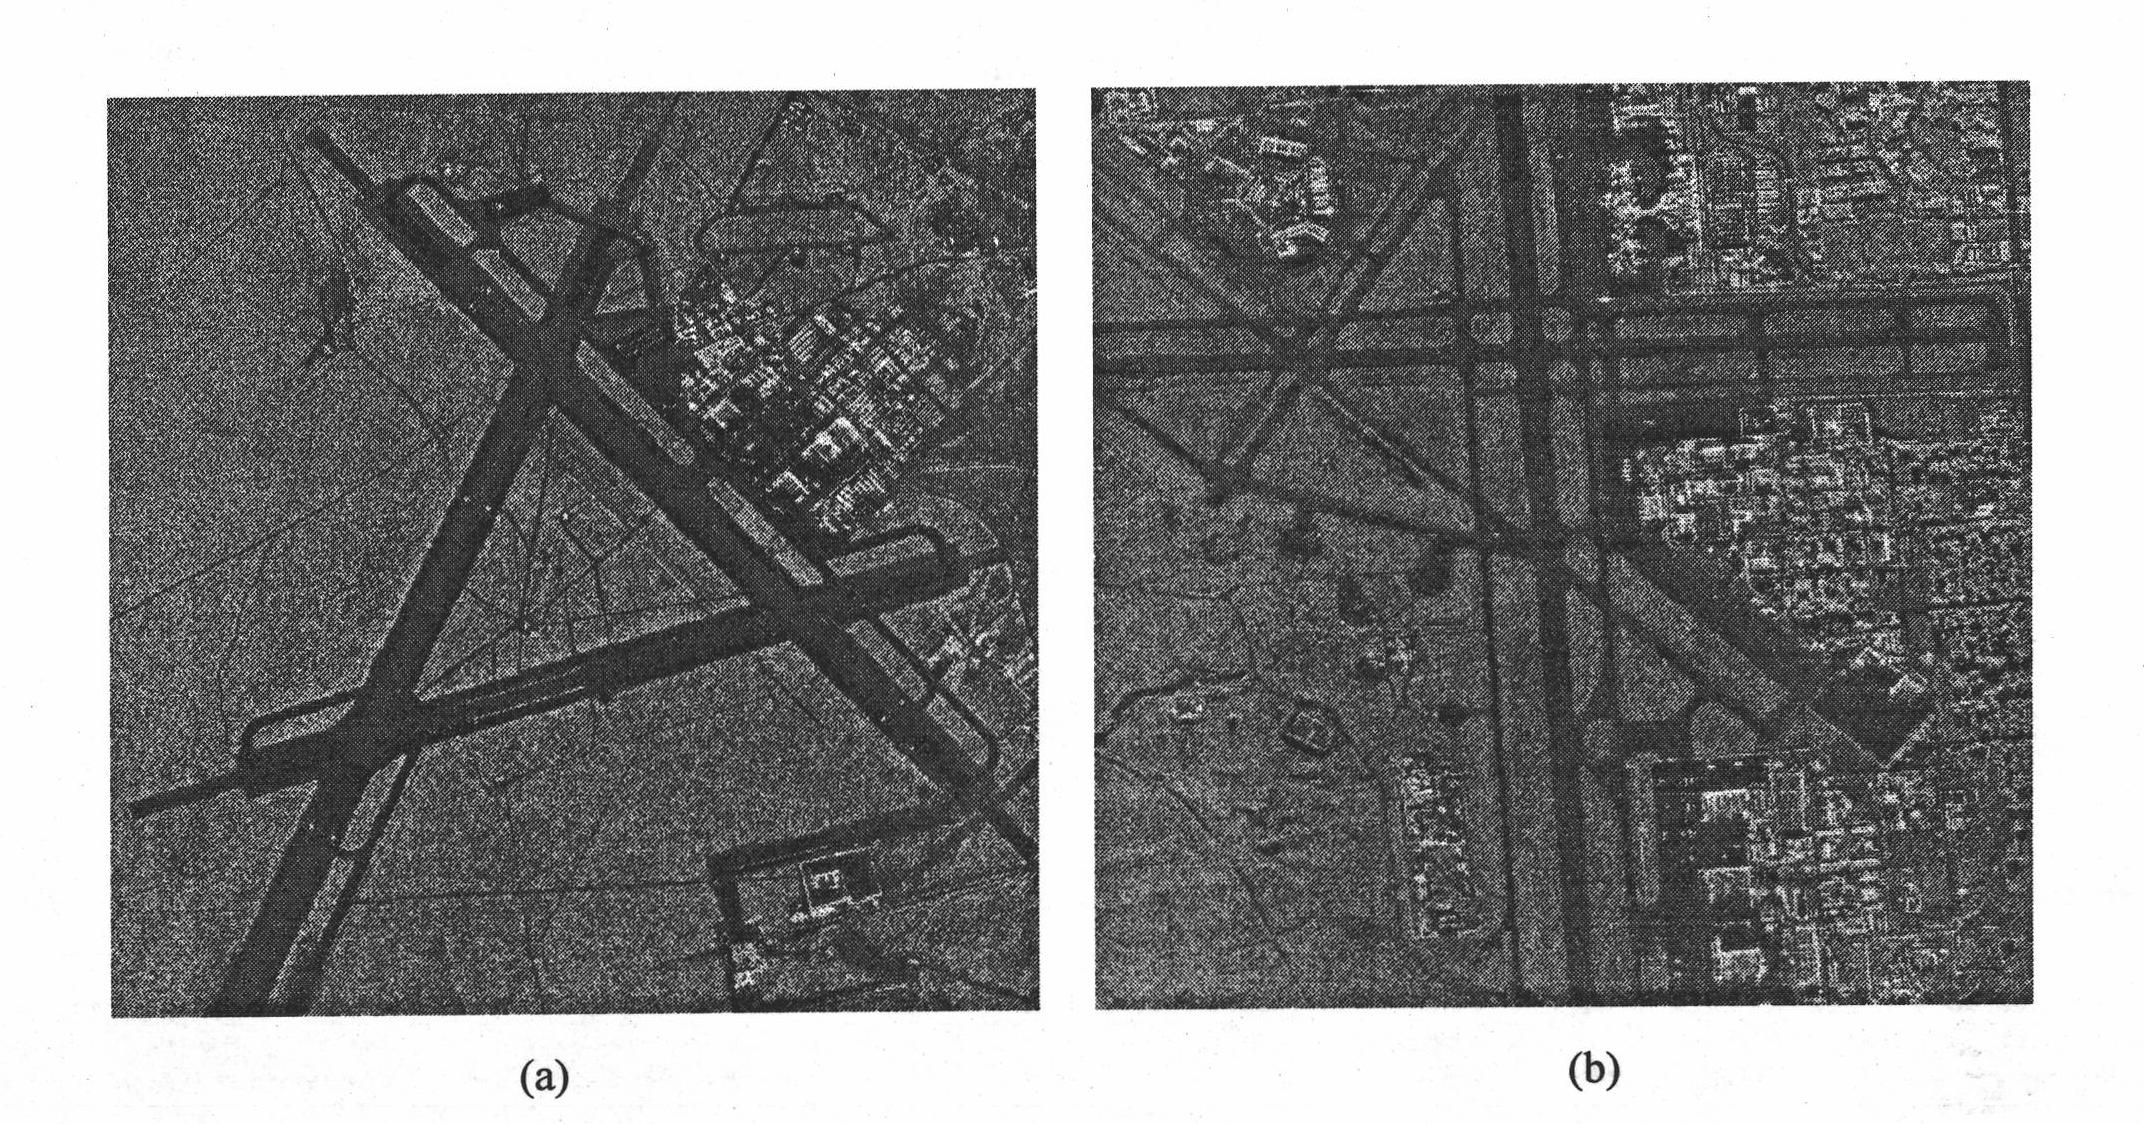 Ridgelet bi-frame system-based SAR image airfield runway extraction method